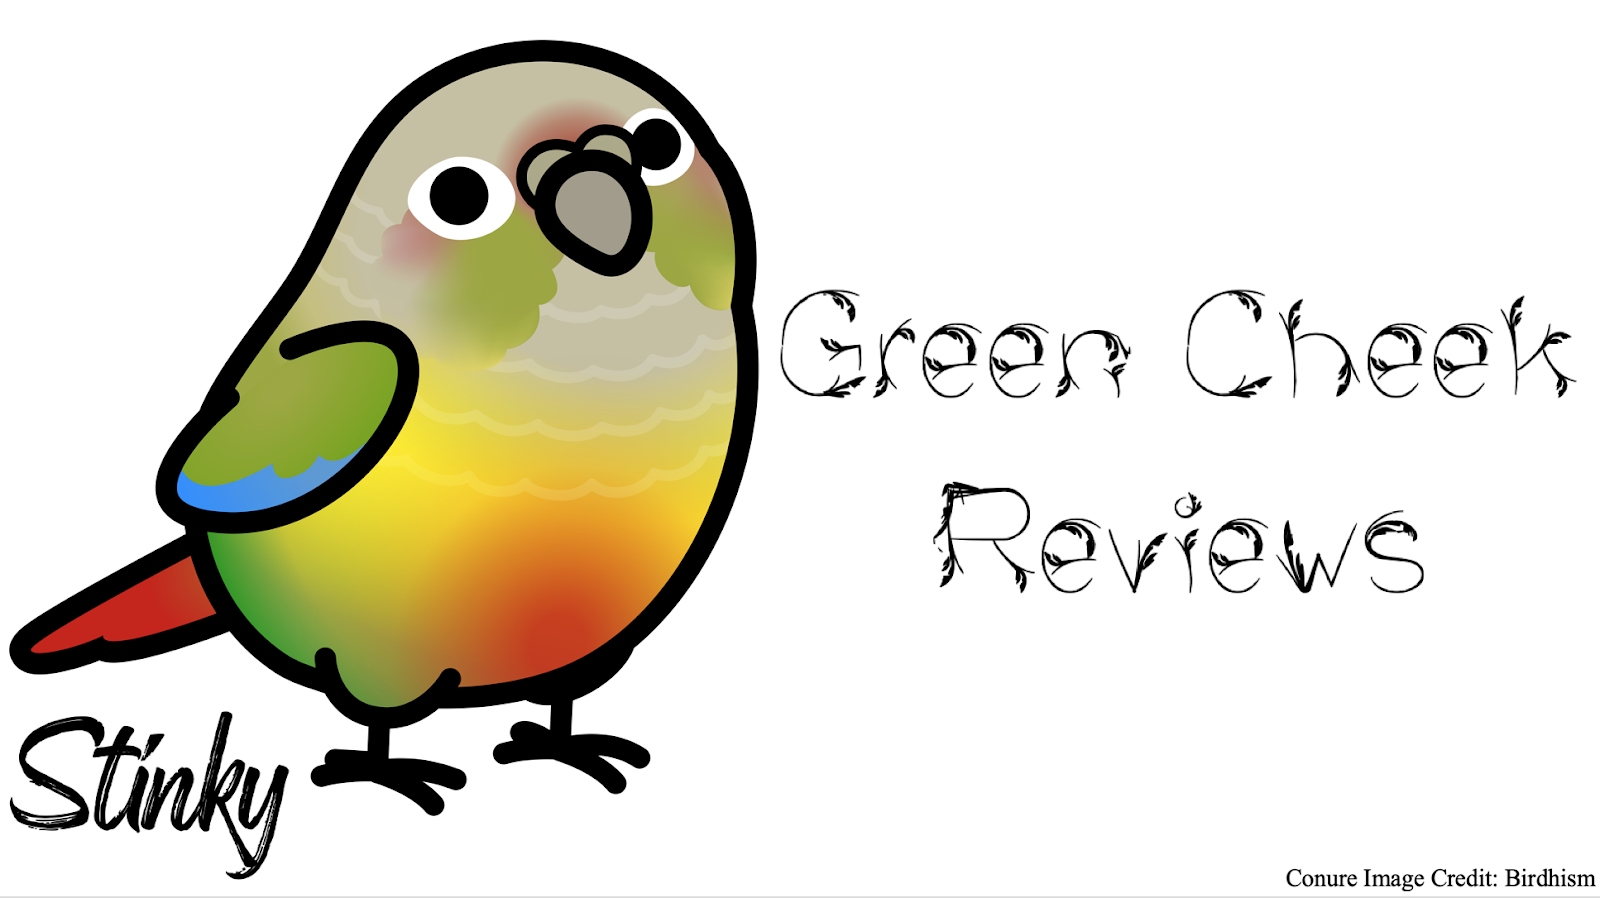 Green Cheek Reviews